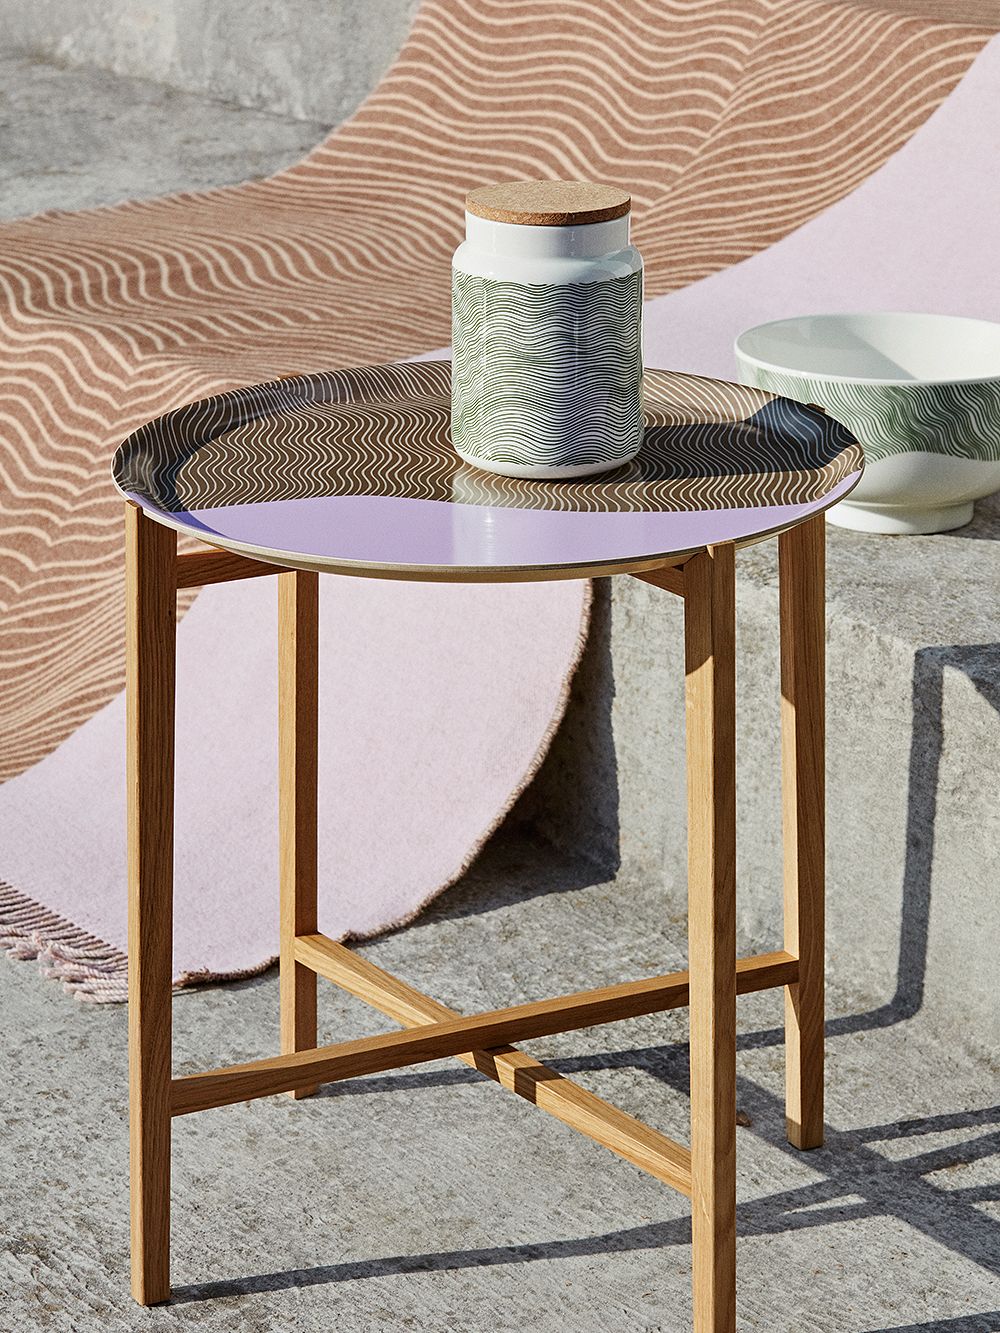 An image of Marimekko's tray table legs combined with a Gabriel Näkki tray.